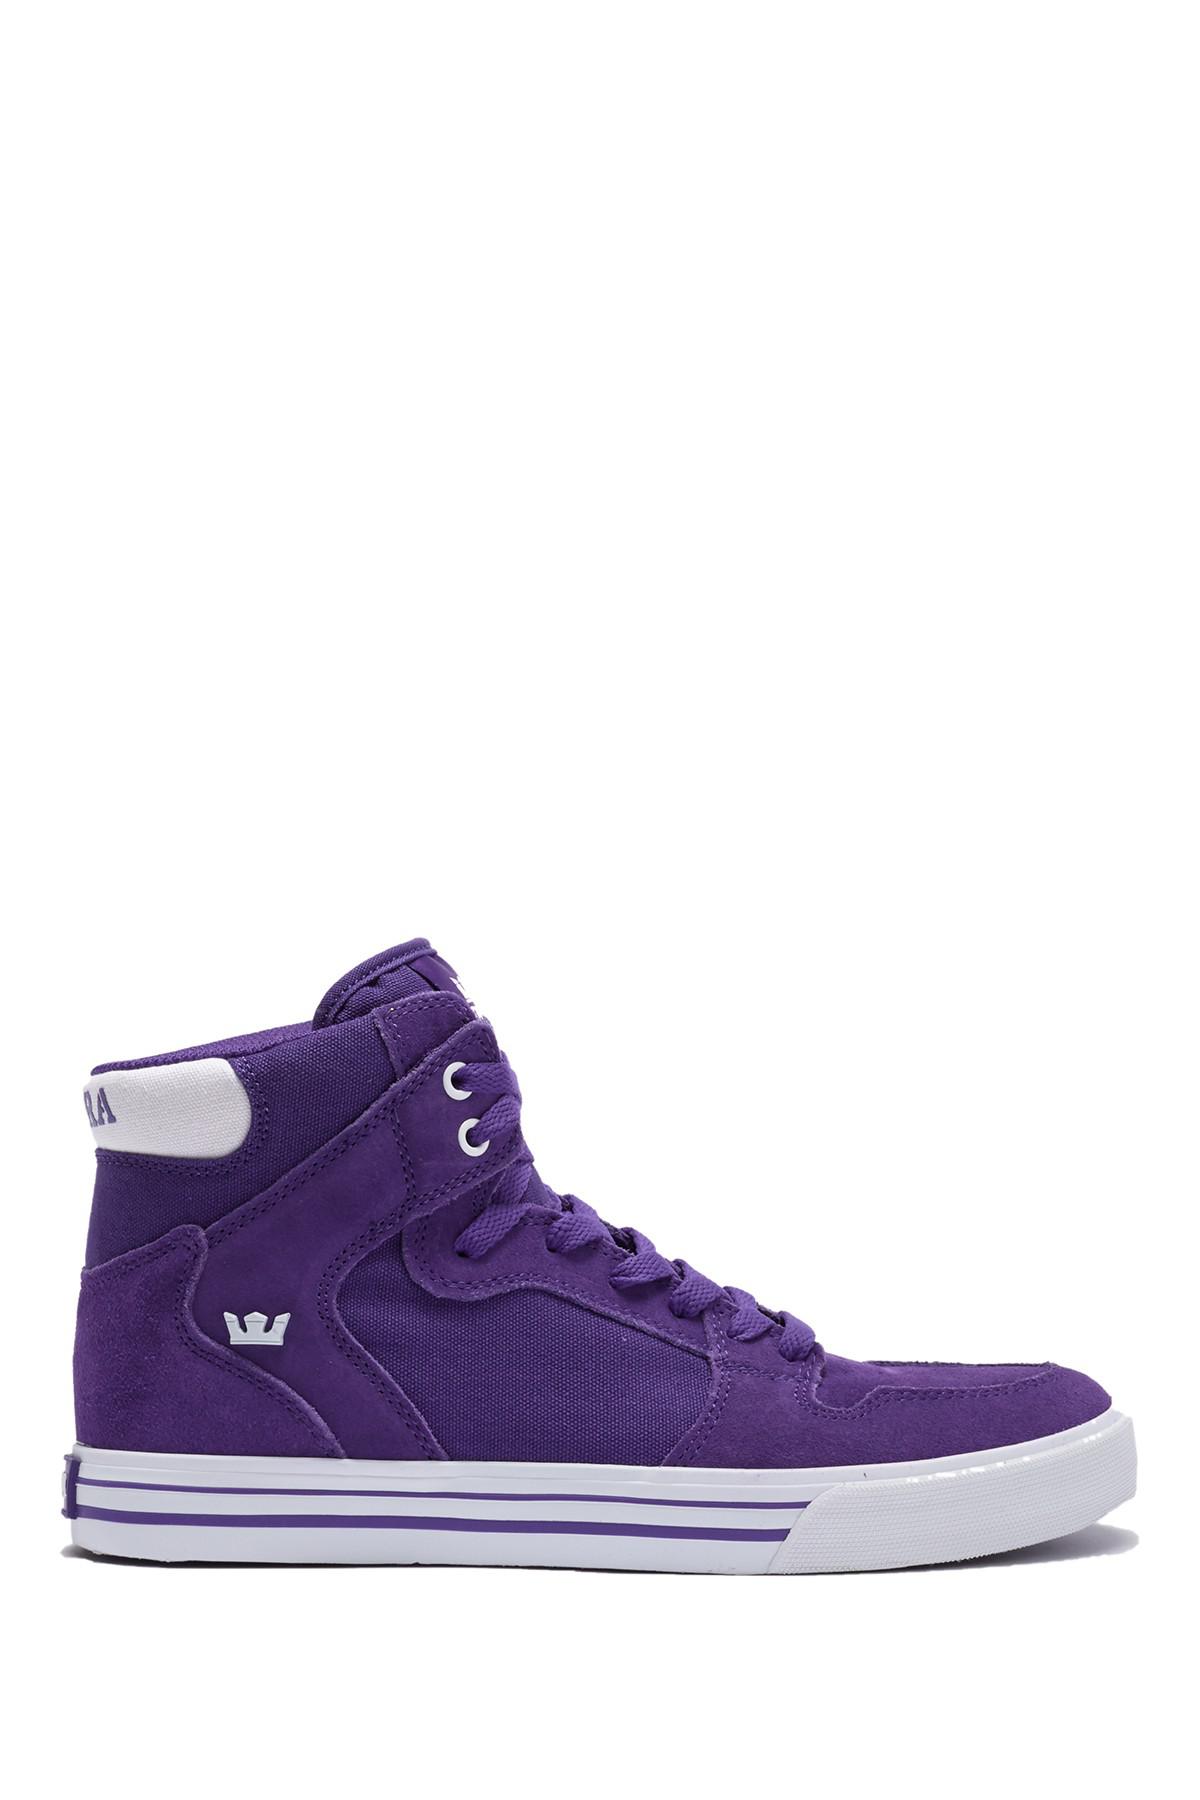 Supra Vaider Suede High Top Sneaker in Purple for Men - Lyst